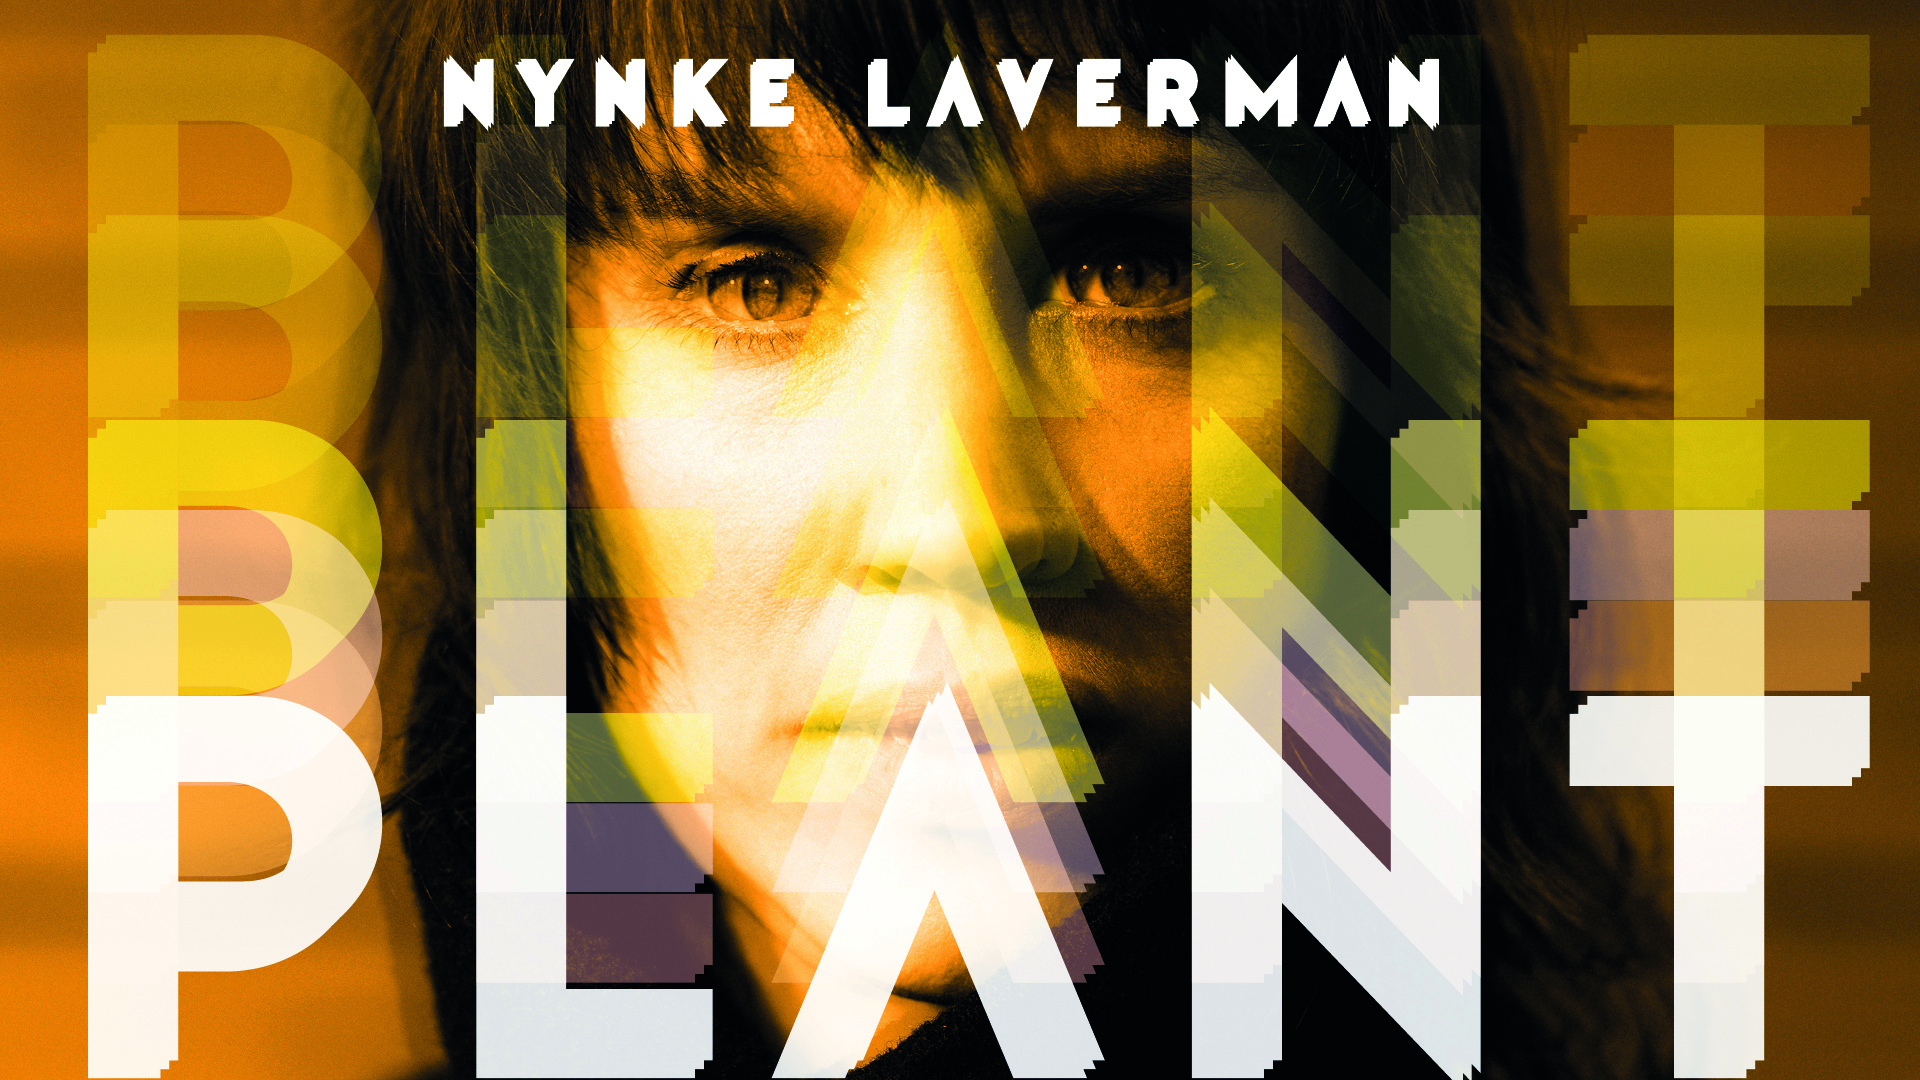 PLANT: muzikaal trippen met Nynke Laverman